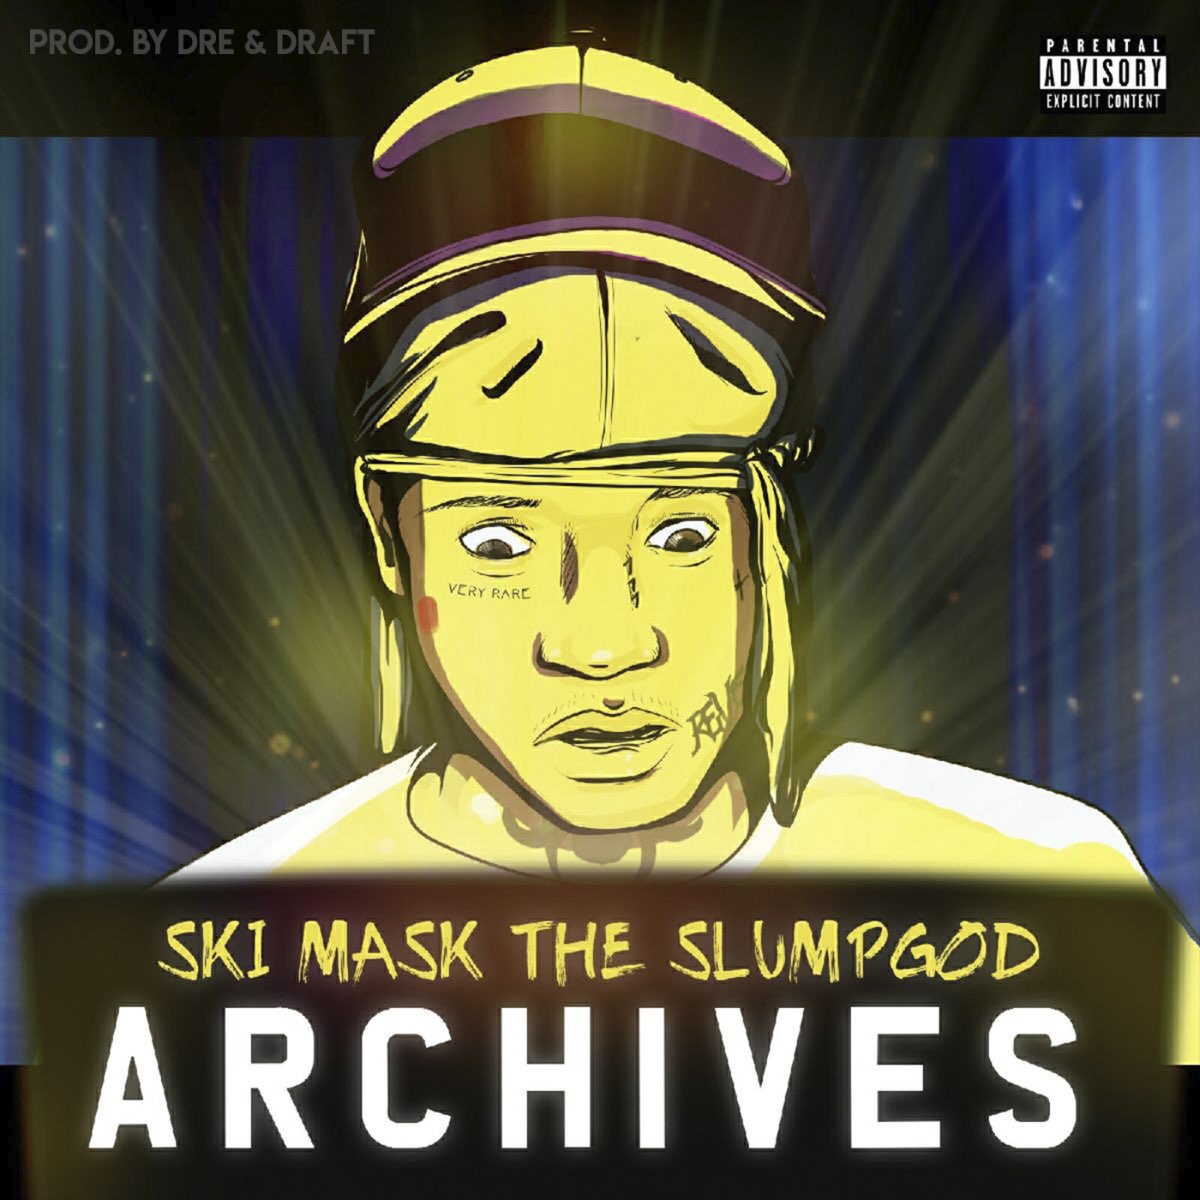 Archives - EP by Ski Mask the Slump God on Apple Music